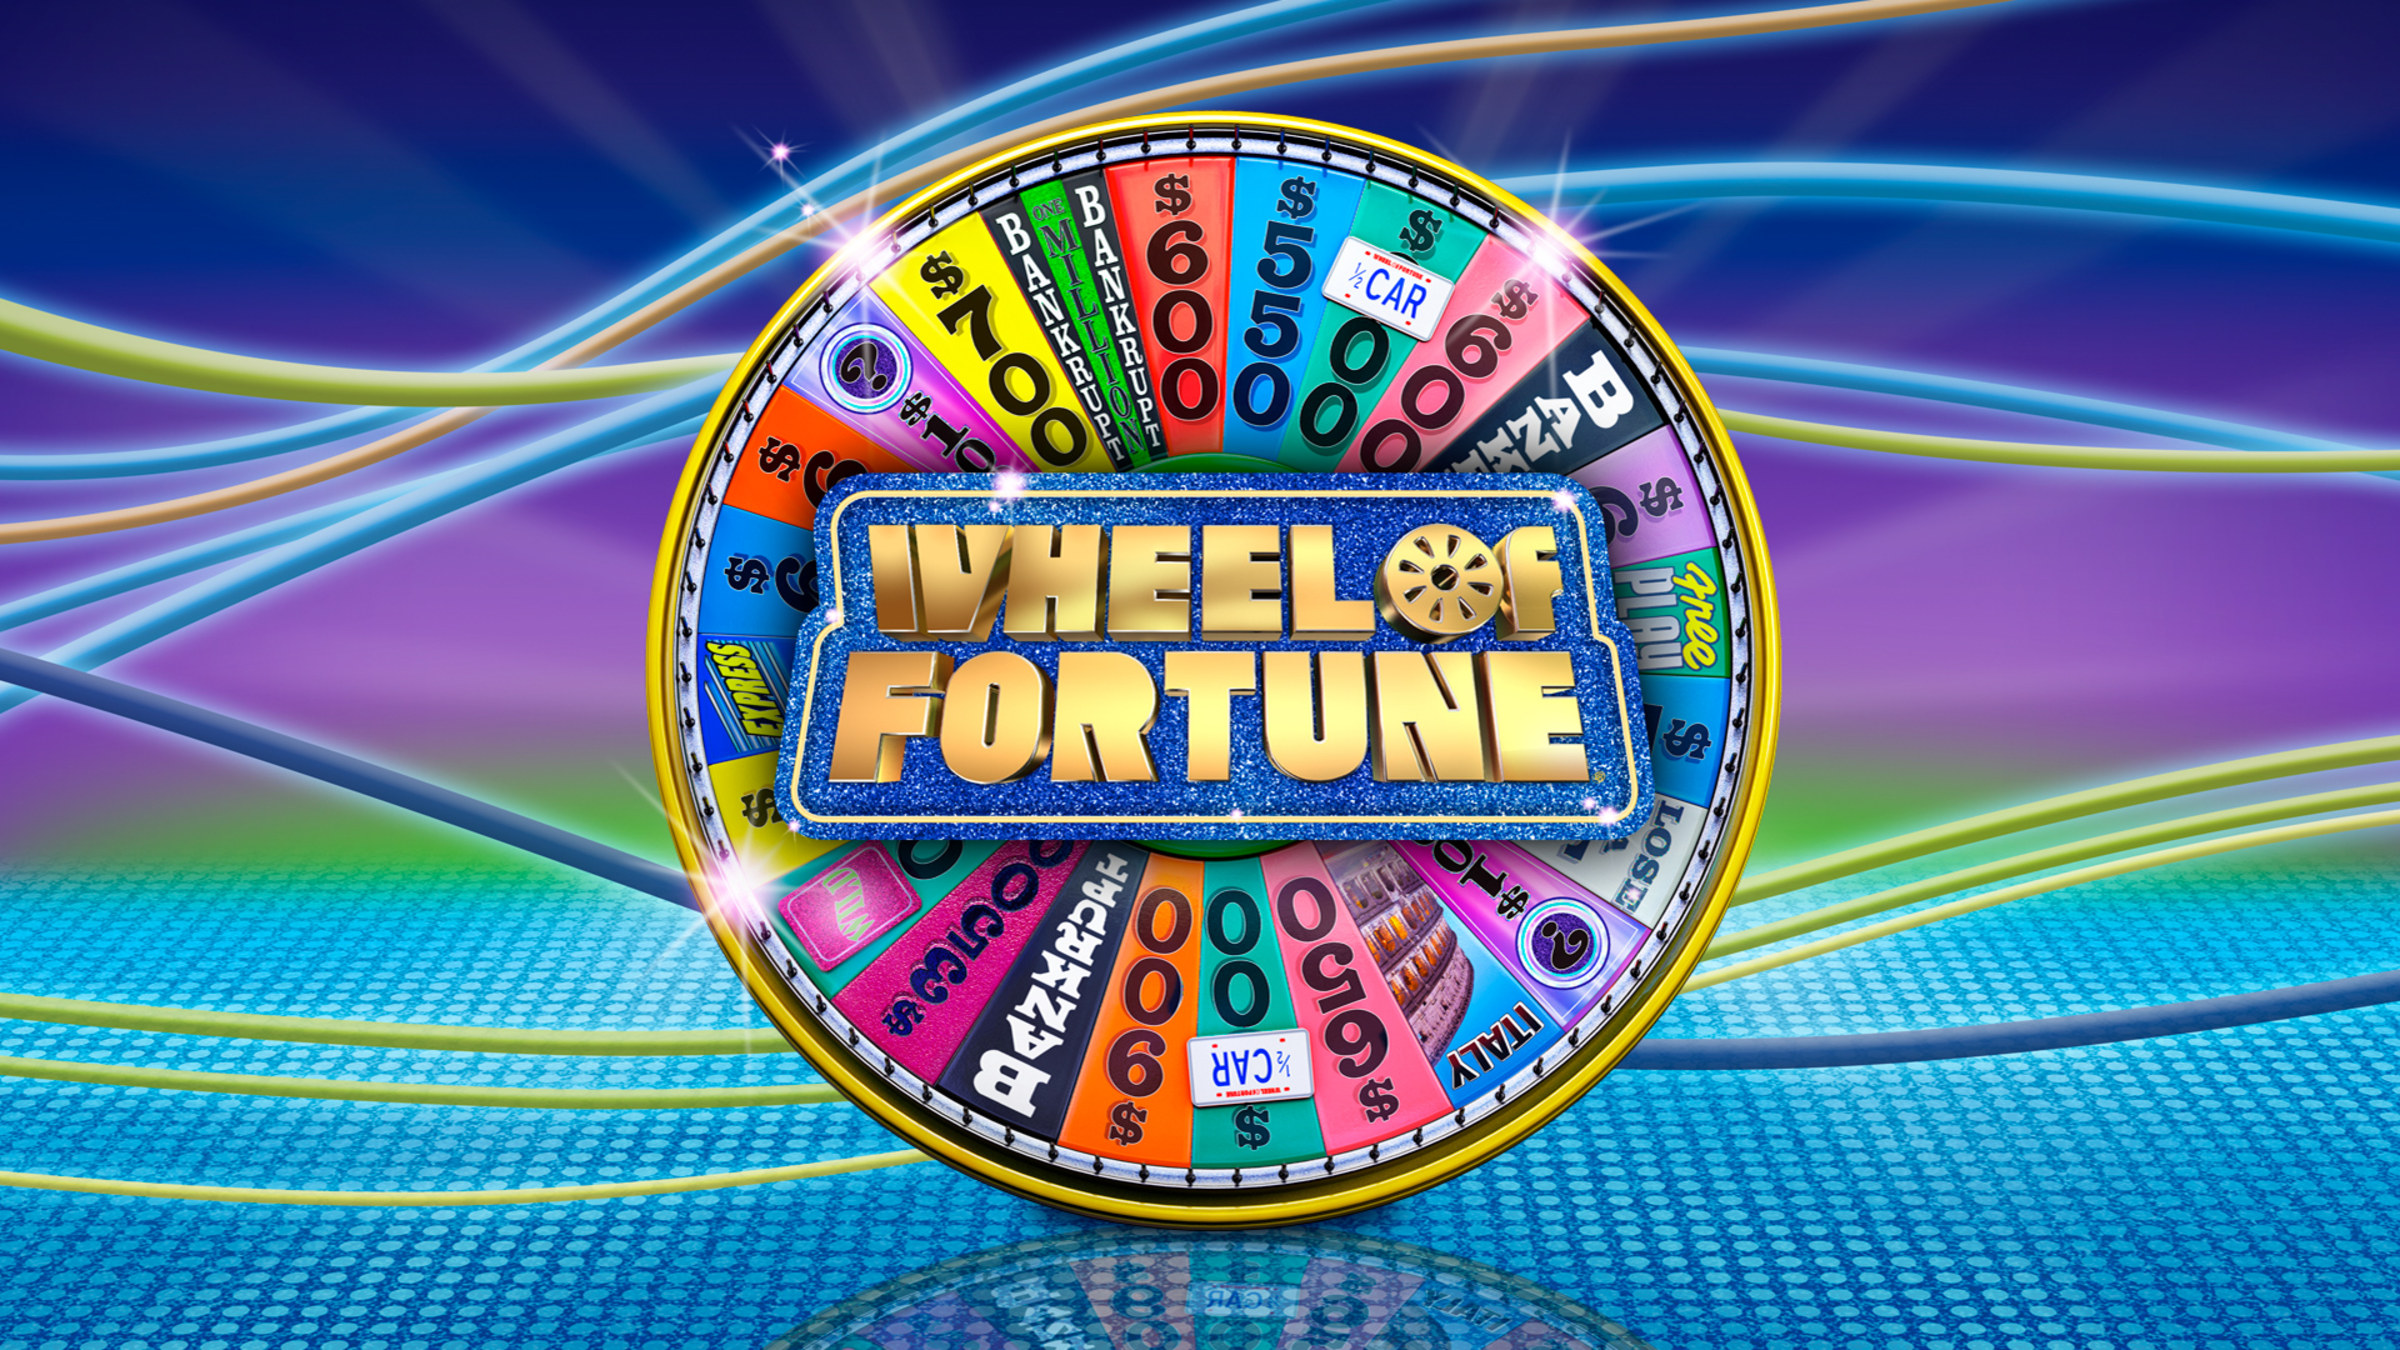 Wheel of fortune remix. Wheel of Fortune игра. Колесо фортуны шоу. Колесо фортуны ТВ шоу. Колесо фортуны казино.